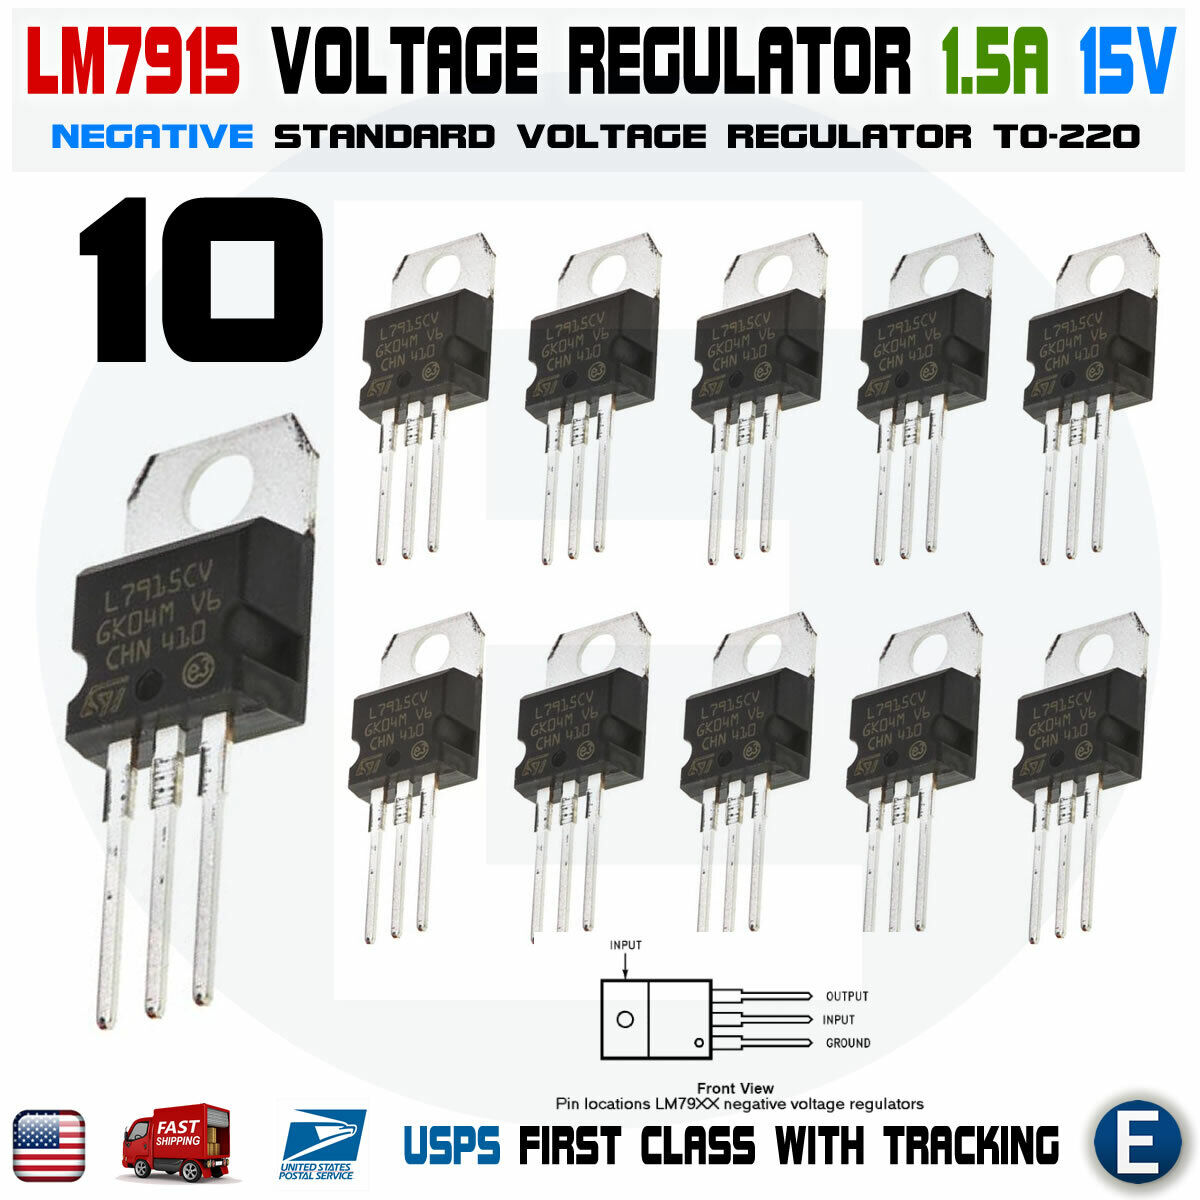 10pcs LM7915 L7915CV 7915 15V Linear Negative Voltage Regulator IC Chip USA